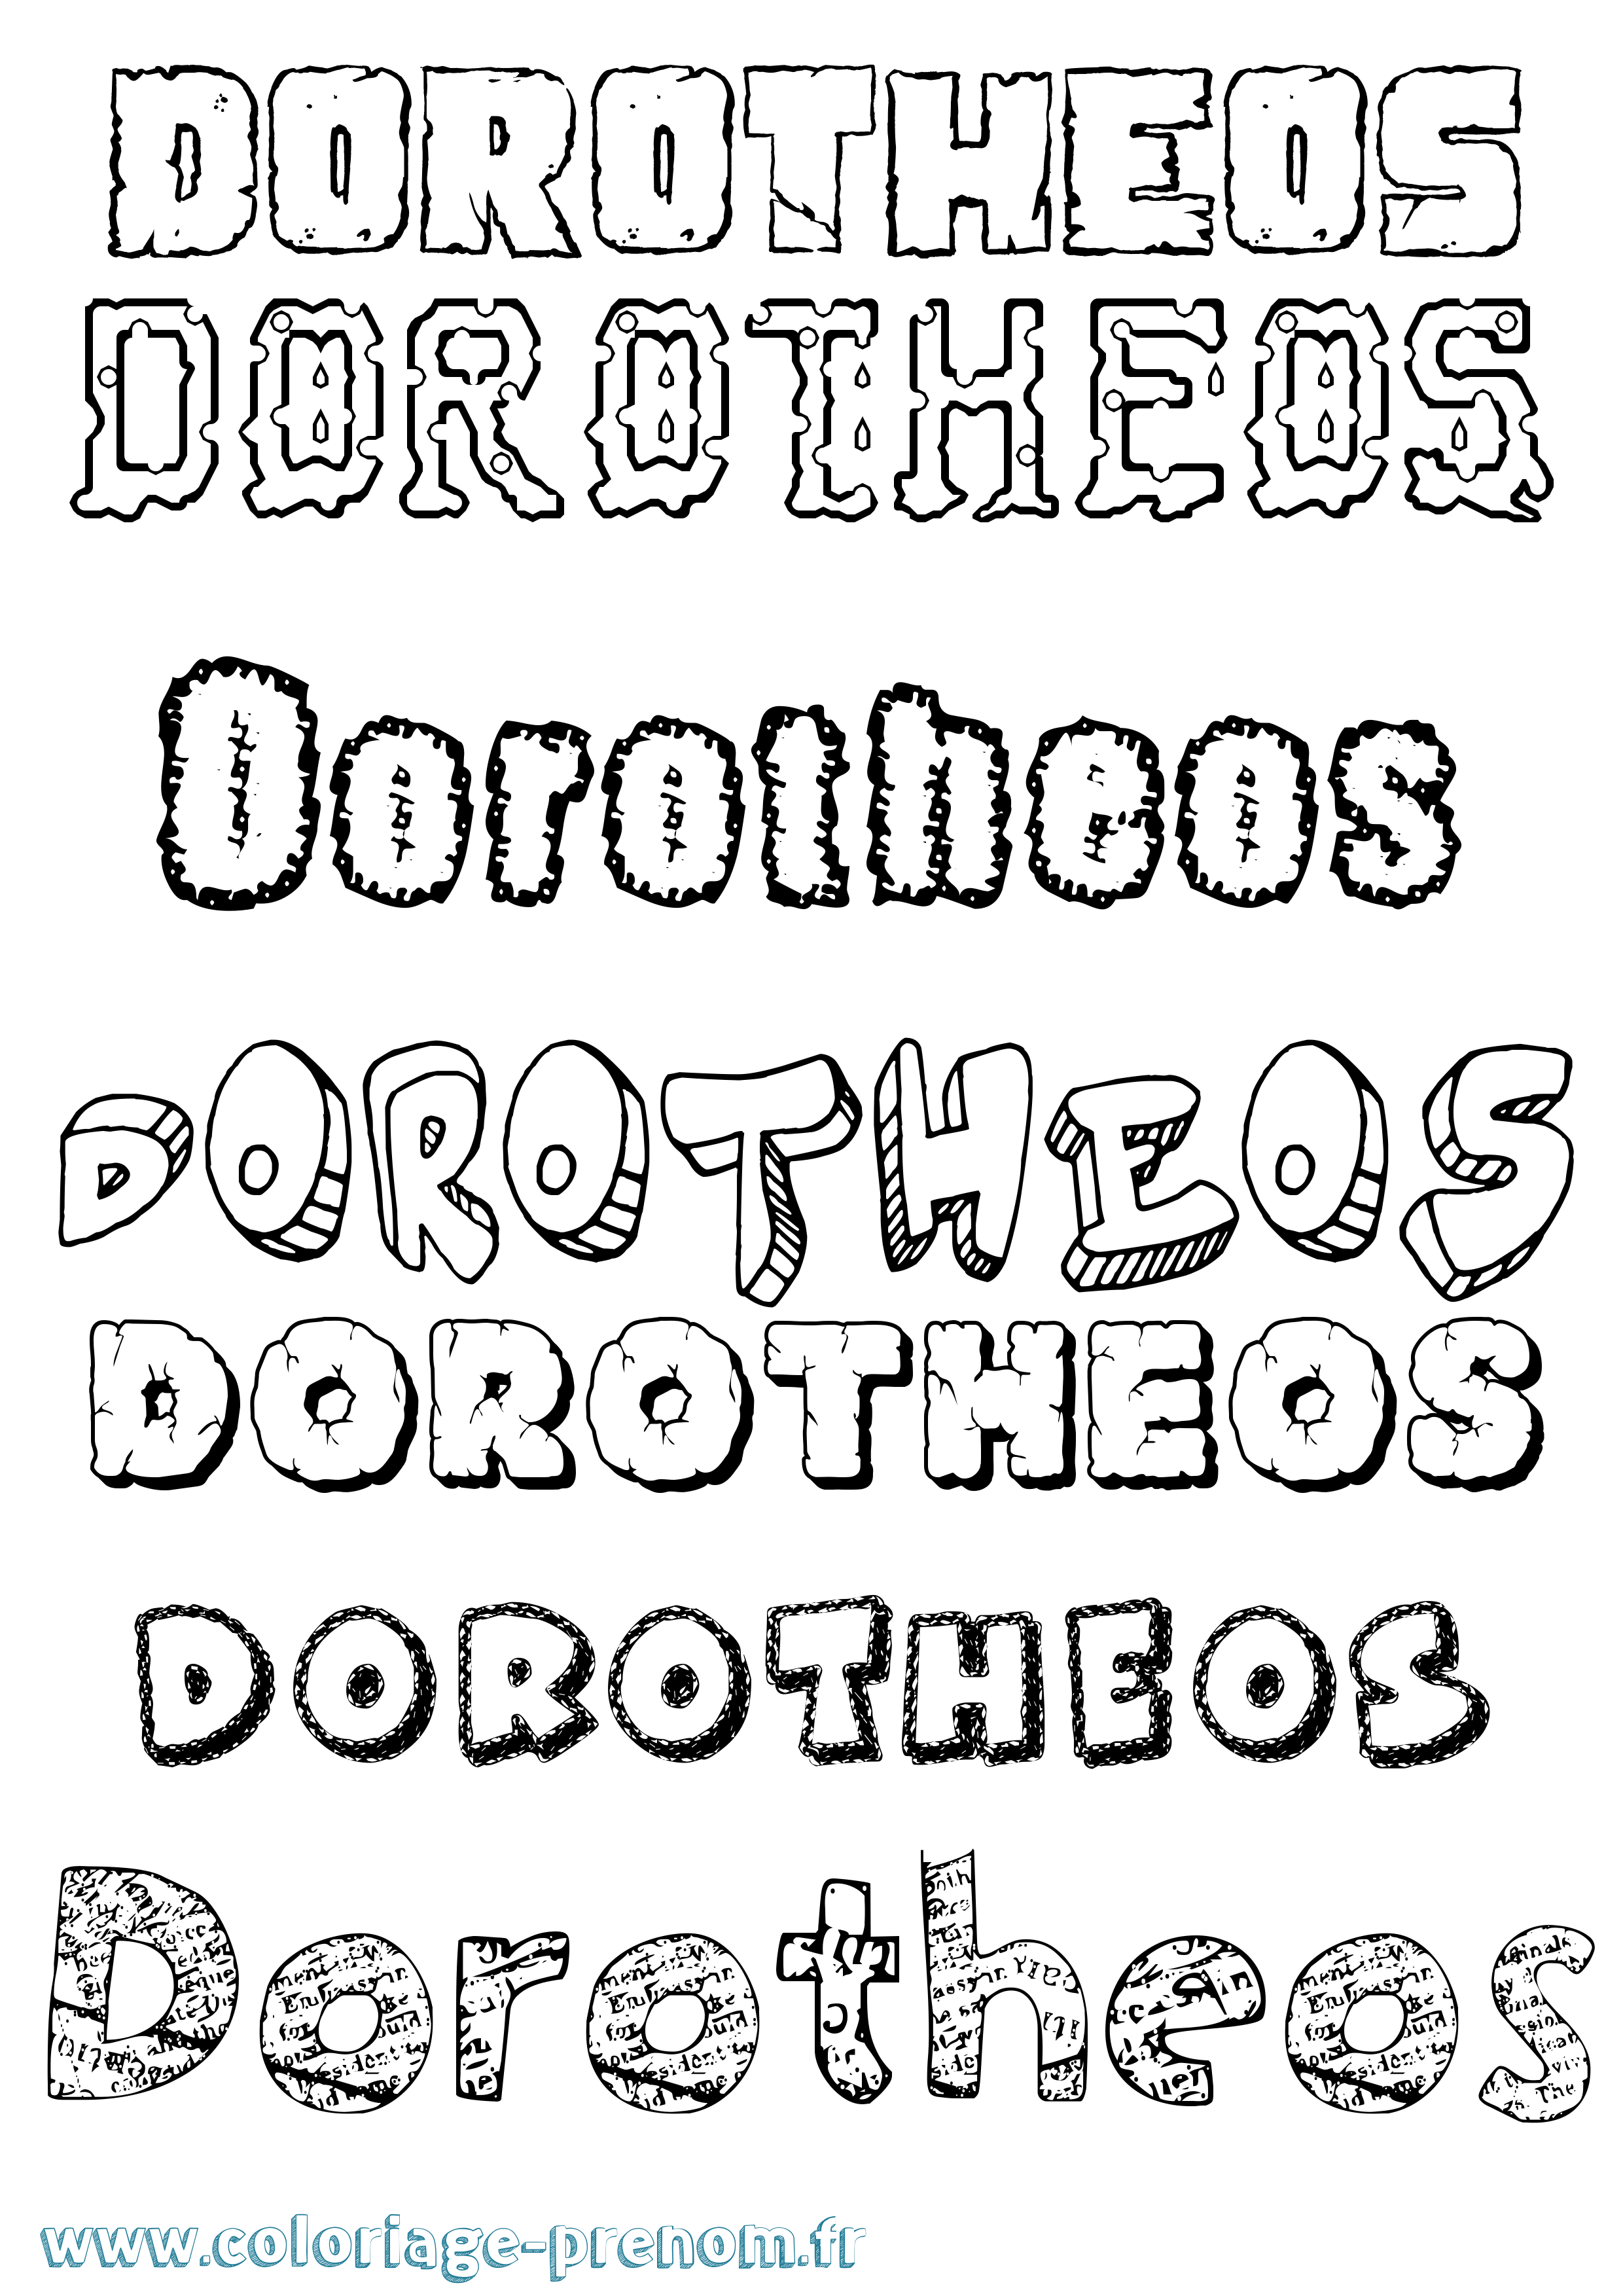 Coloriage prénom Dorotheos Destructuré